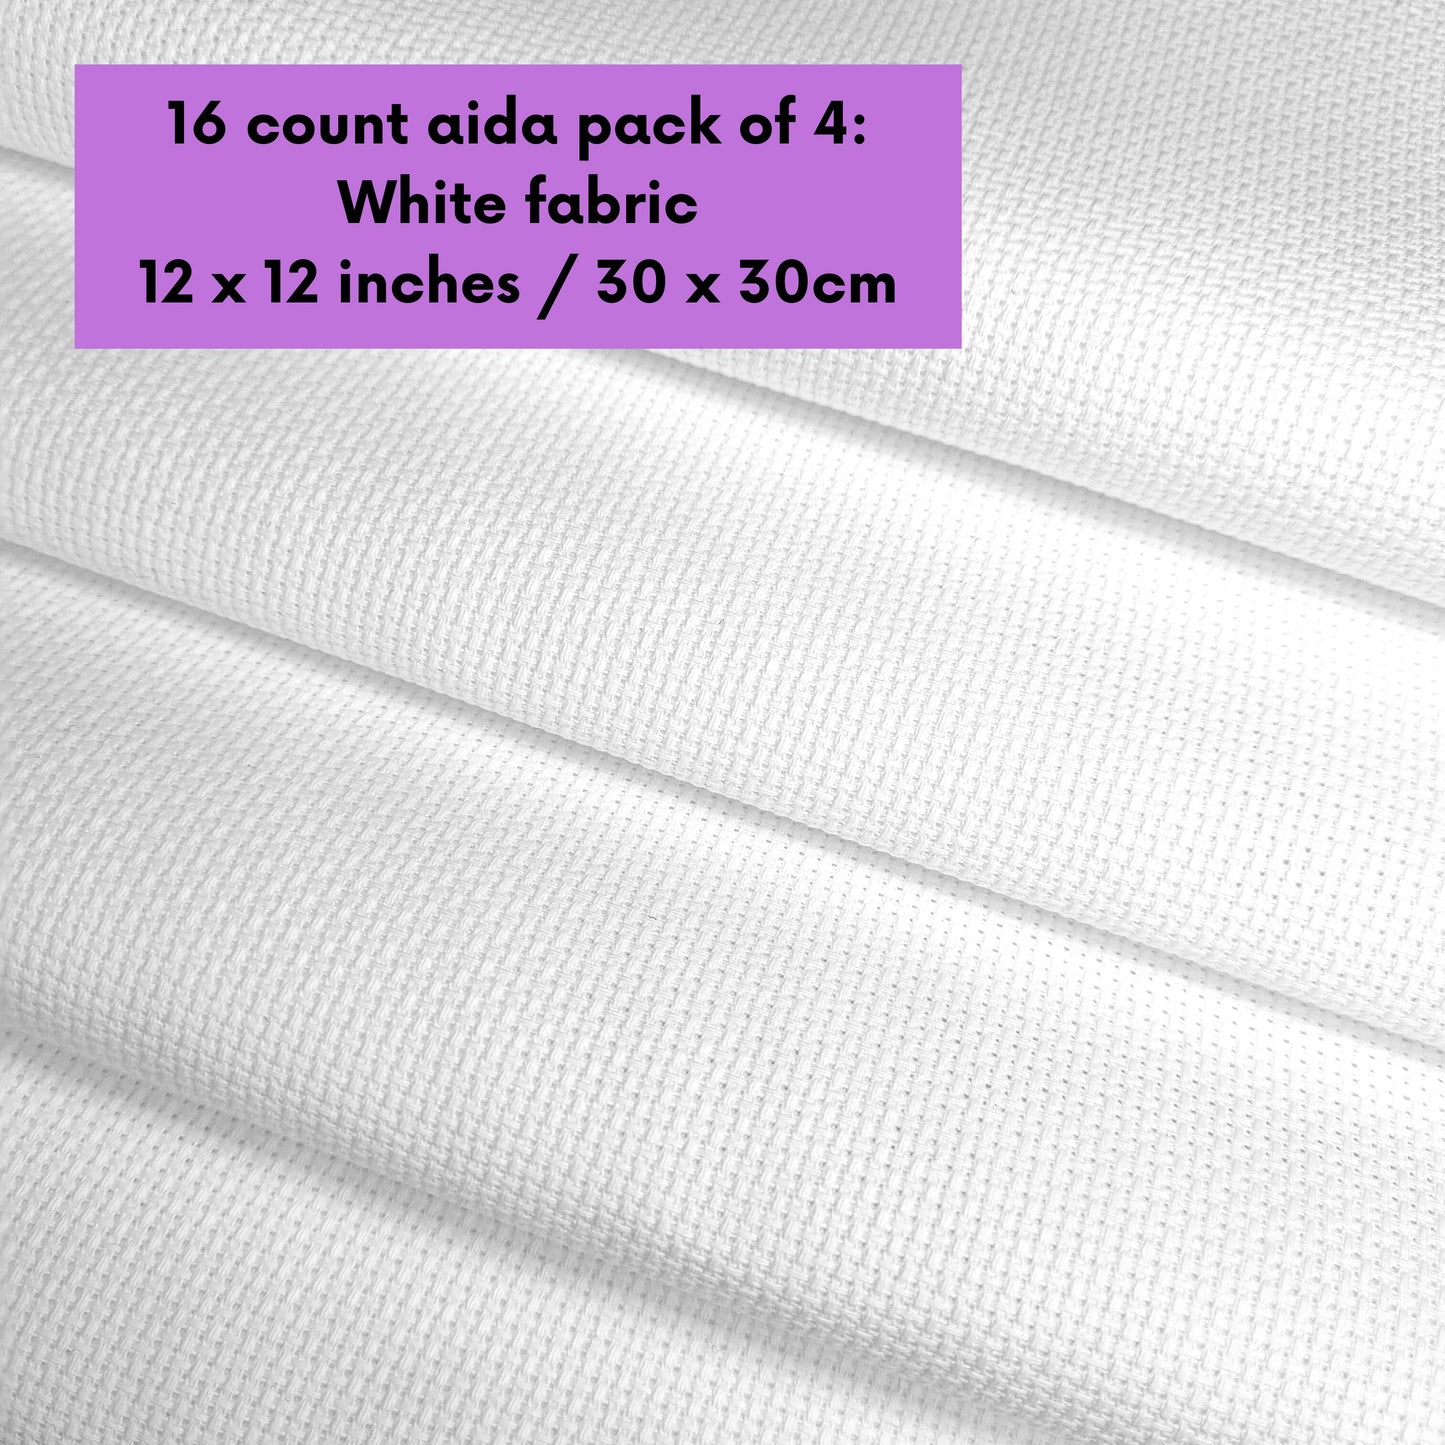 4 Pieces of 16 Count White Aida Fabric 12 x 12 Inches / 30cm x 30cm